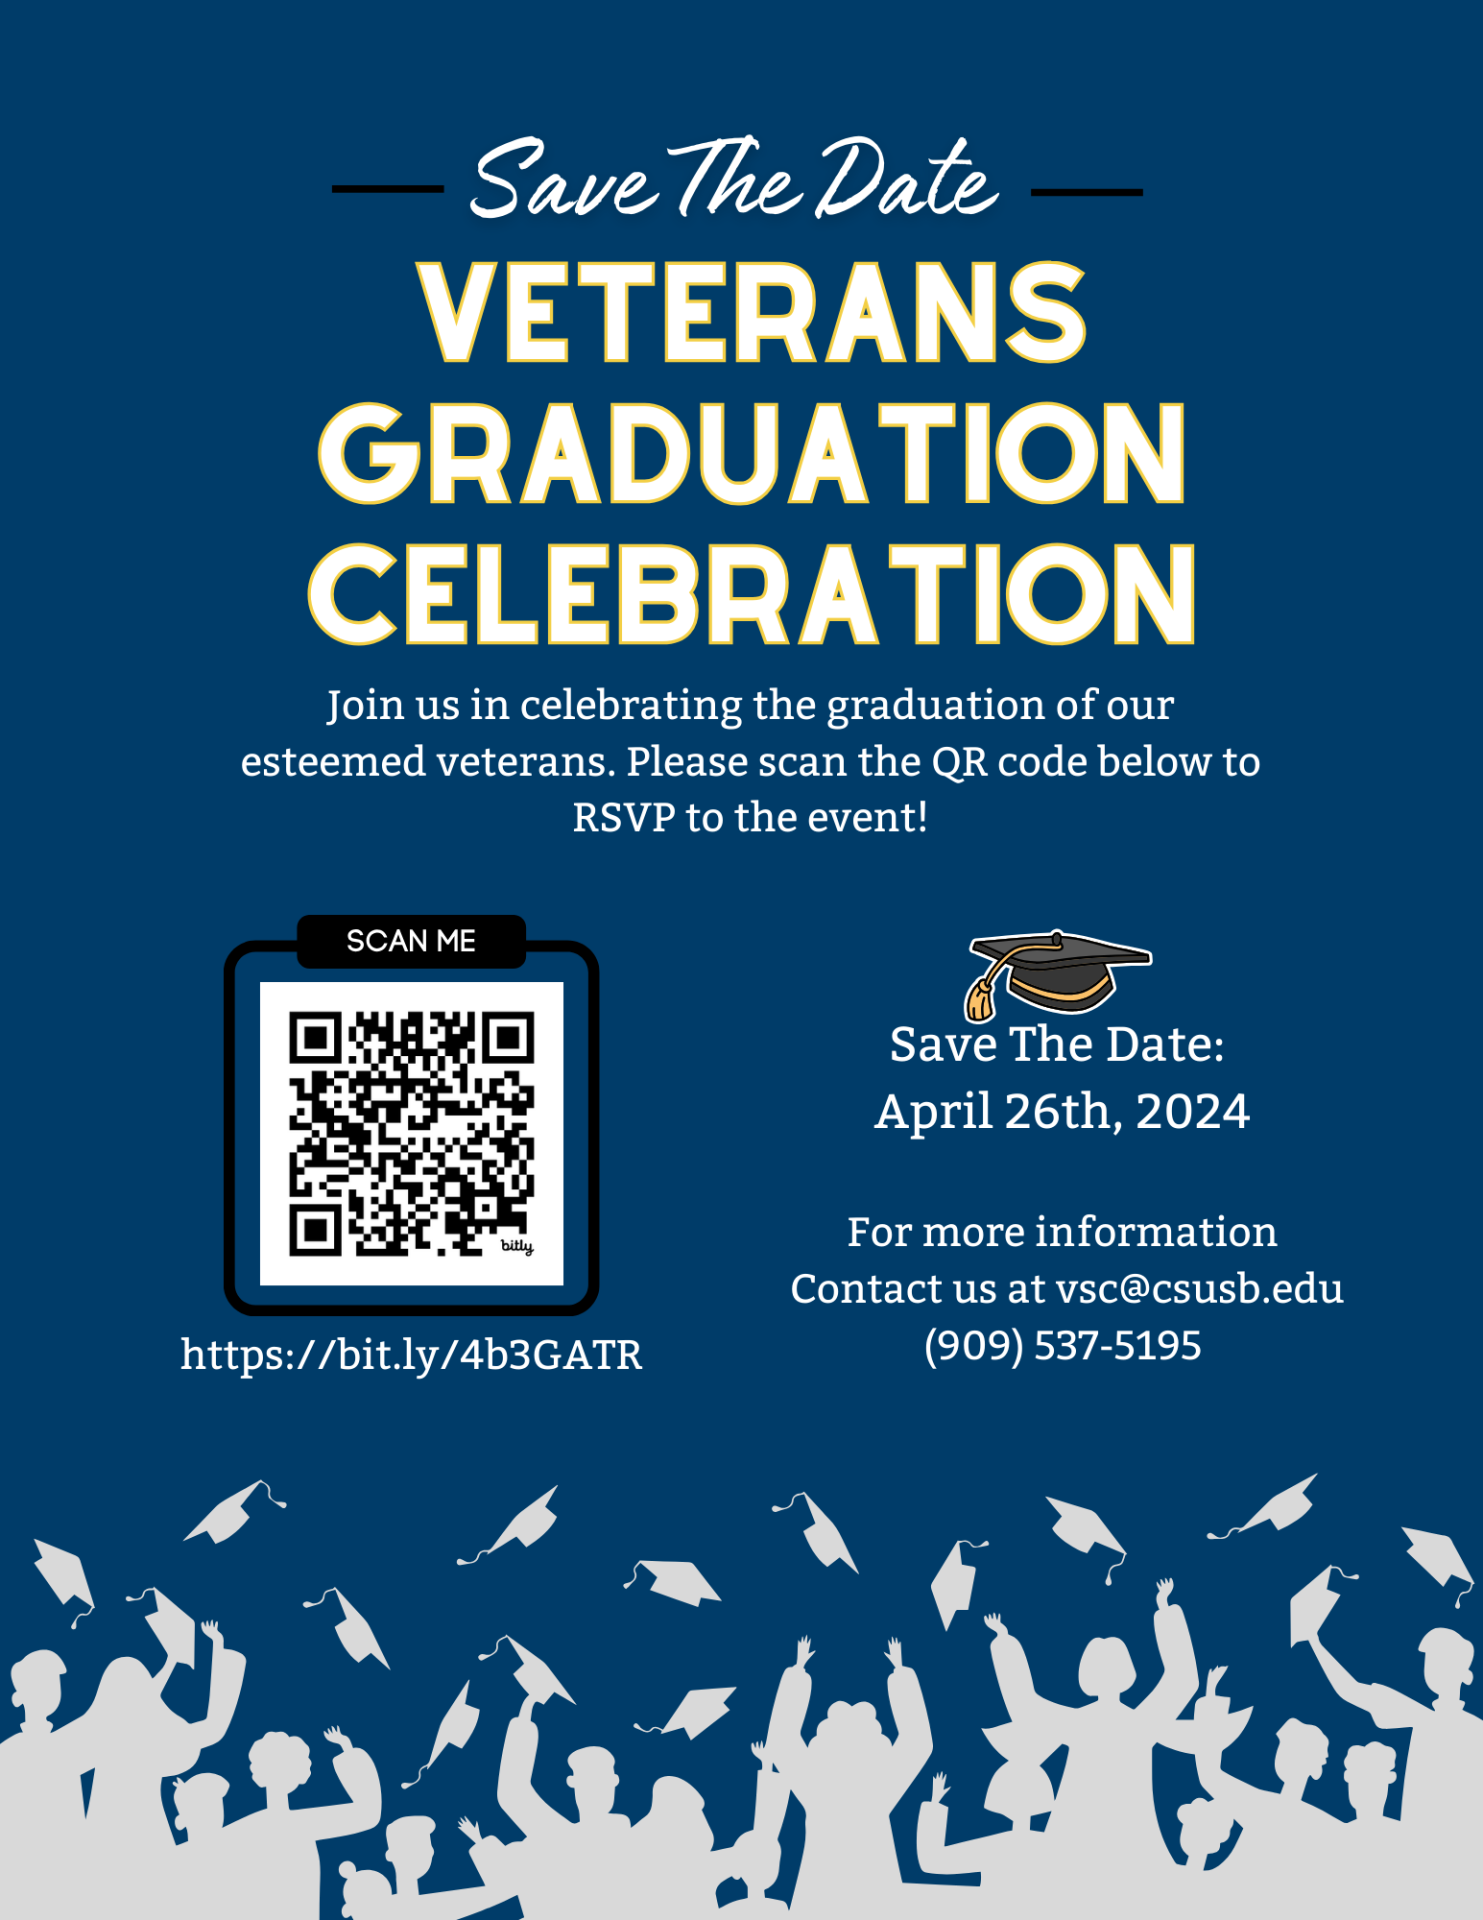 Save the Date Flyer for Spring 2024 Veterans Graduation Celebration